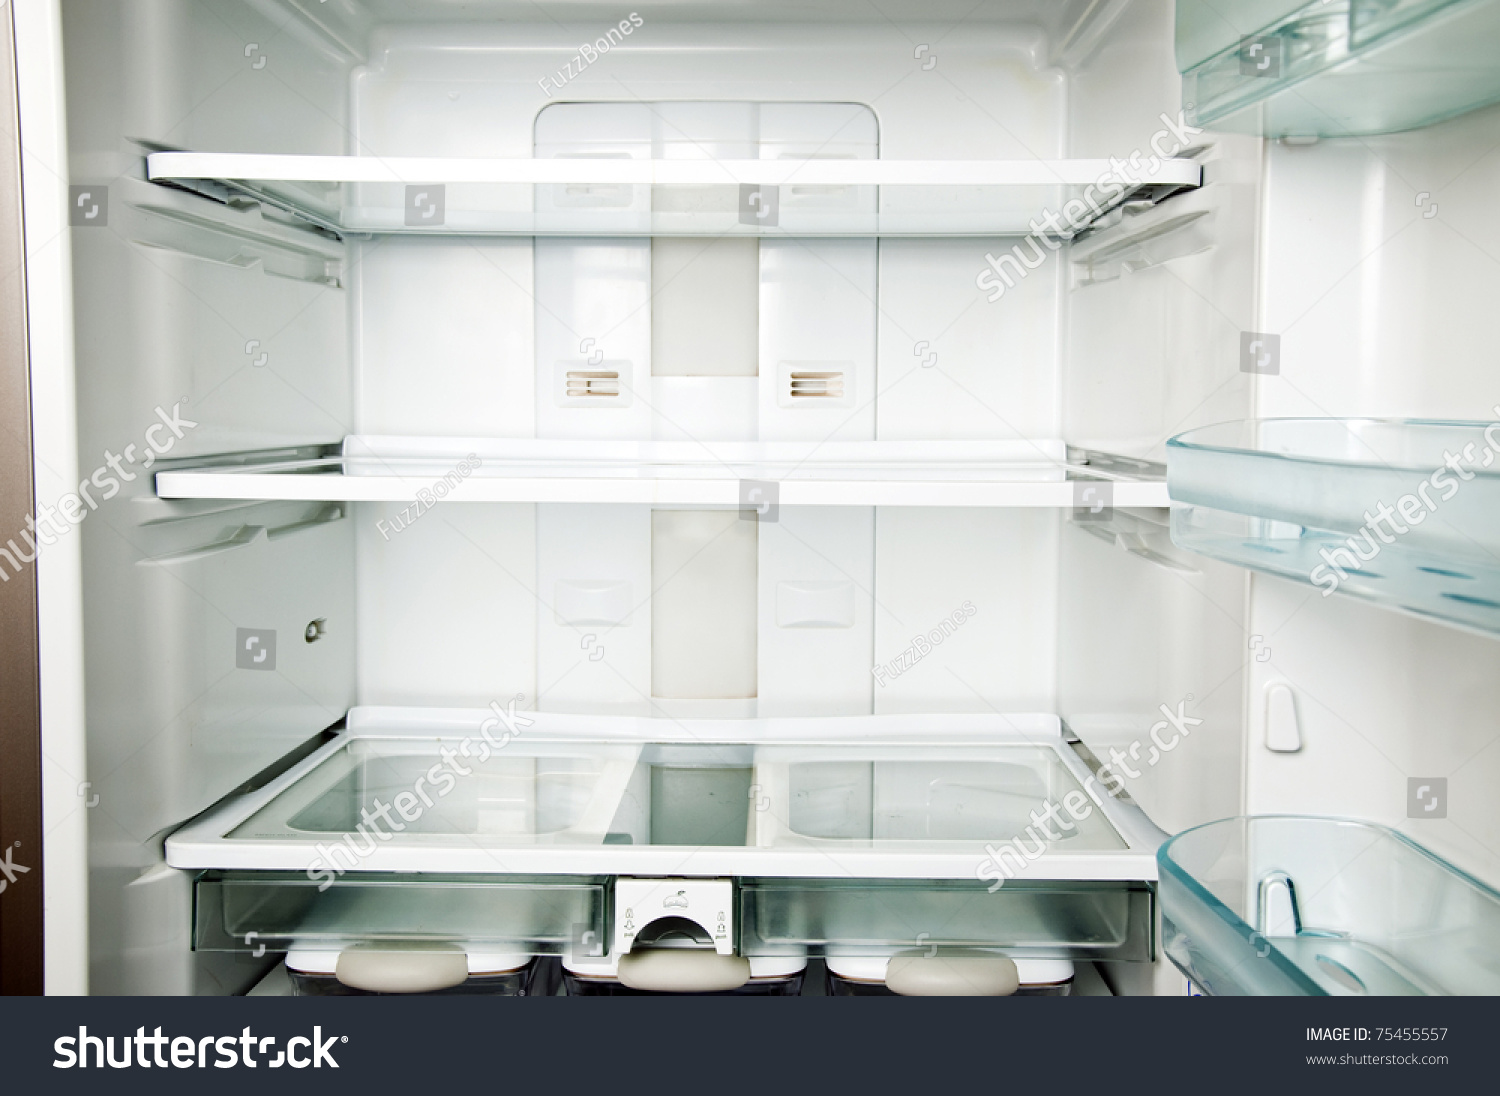 Empty Refrigerator Shelfs Close Stock Photo 75455557 - Shutterstock